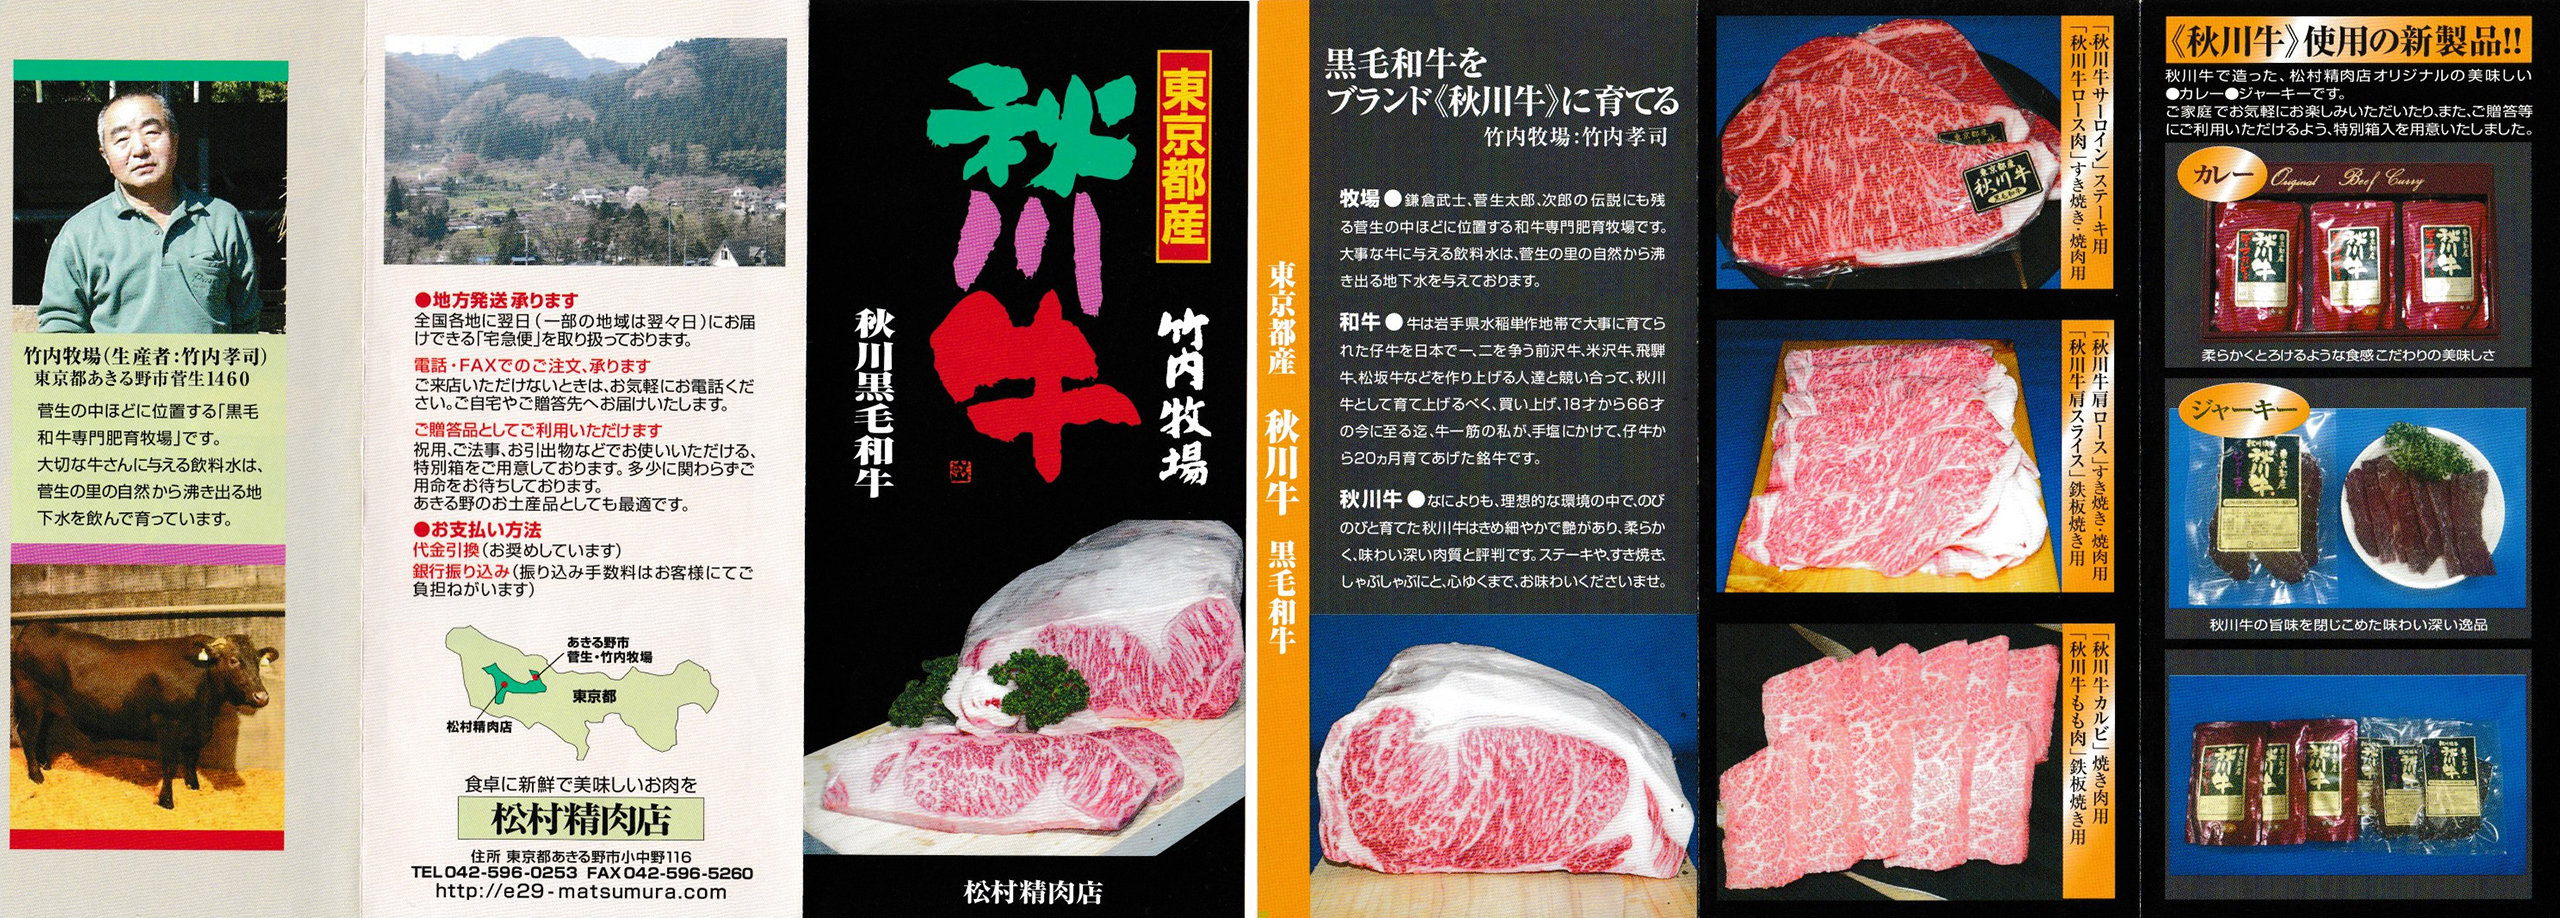 akigawa-beef